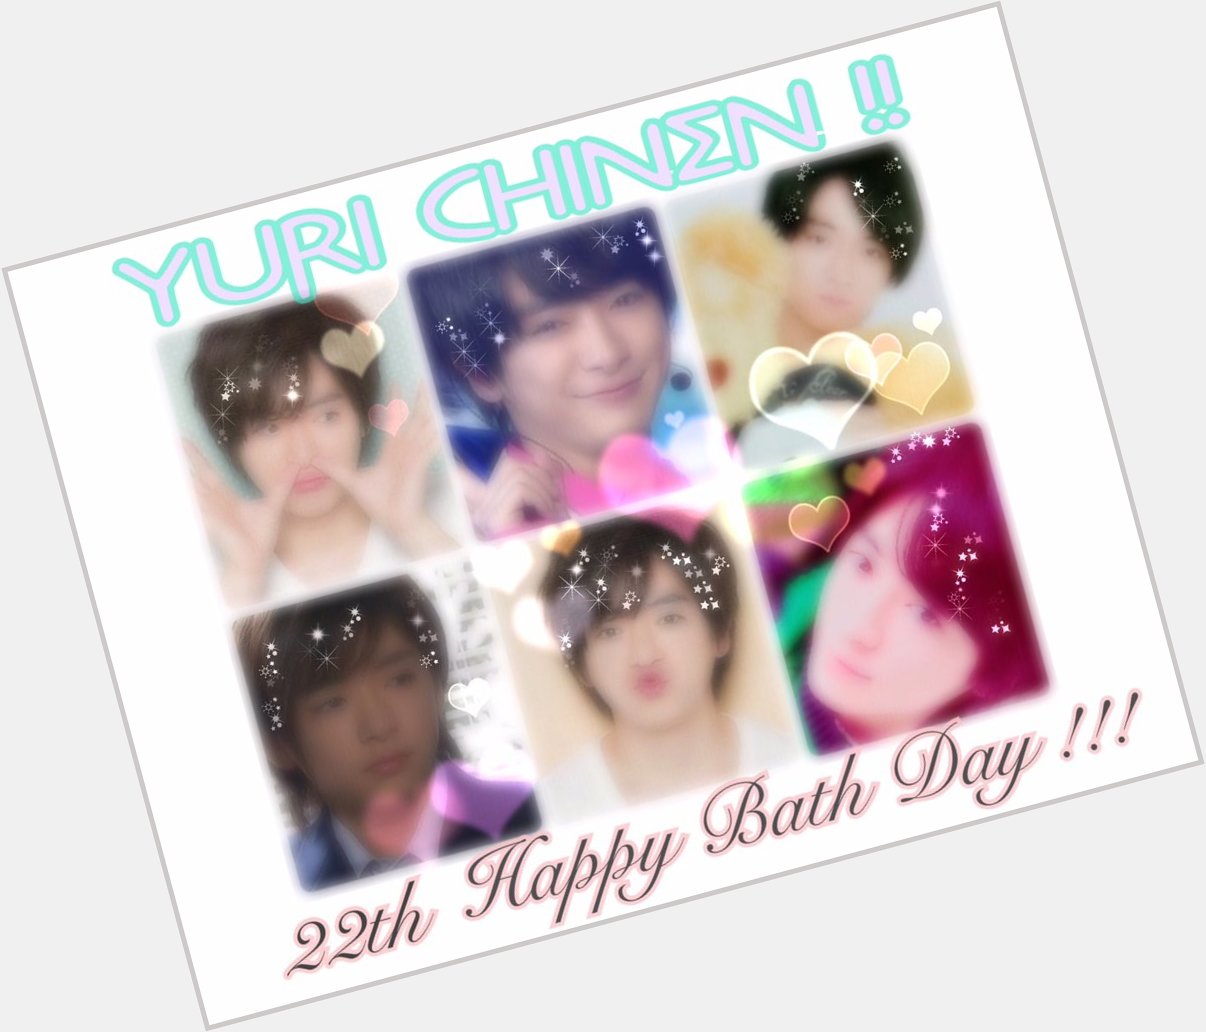  Yuri Chinen  22th  HAPPY BIRTHDAY                               